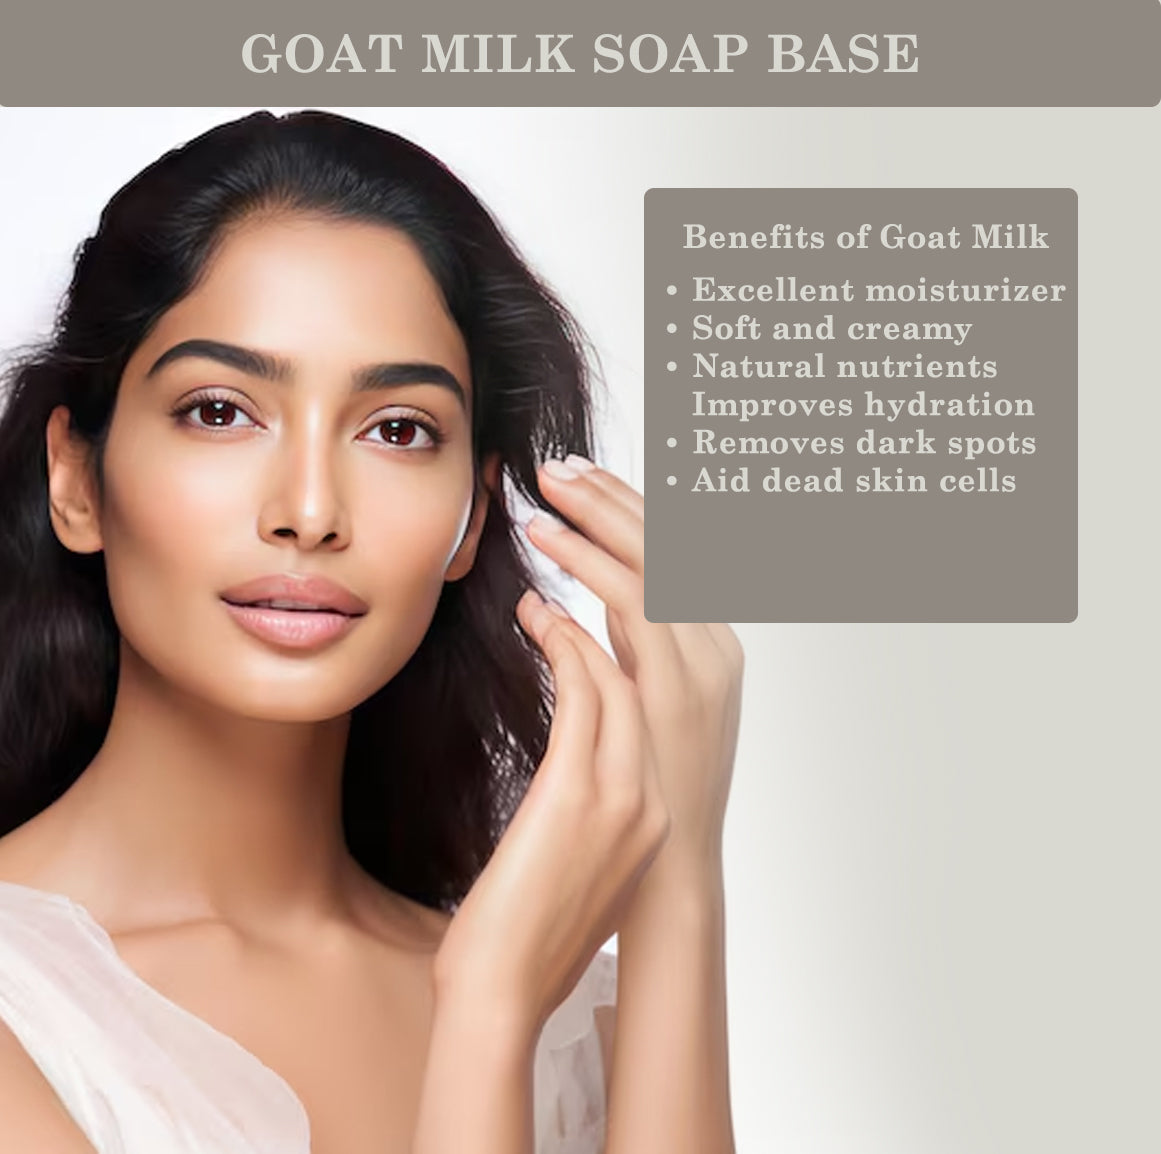 Goat Milk Soap uses